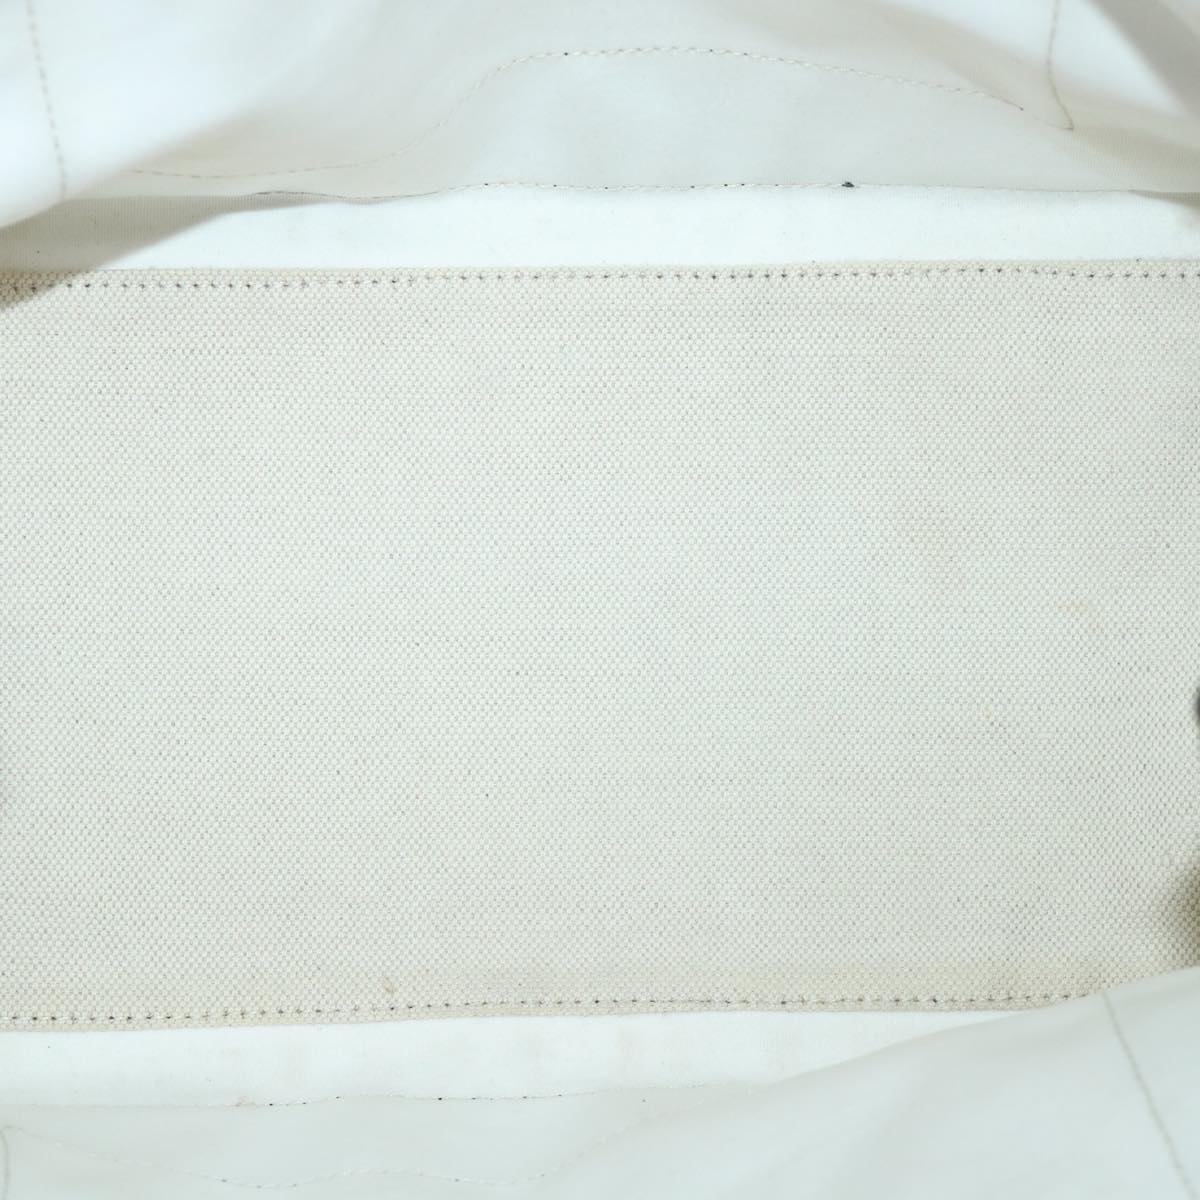 BALENCIAGA Tote Bag Canvas White 339933 Auth ep1945